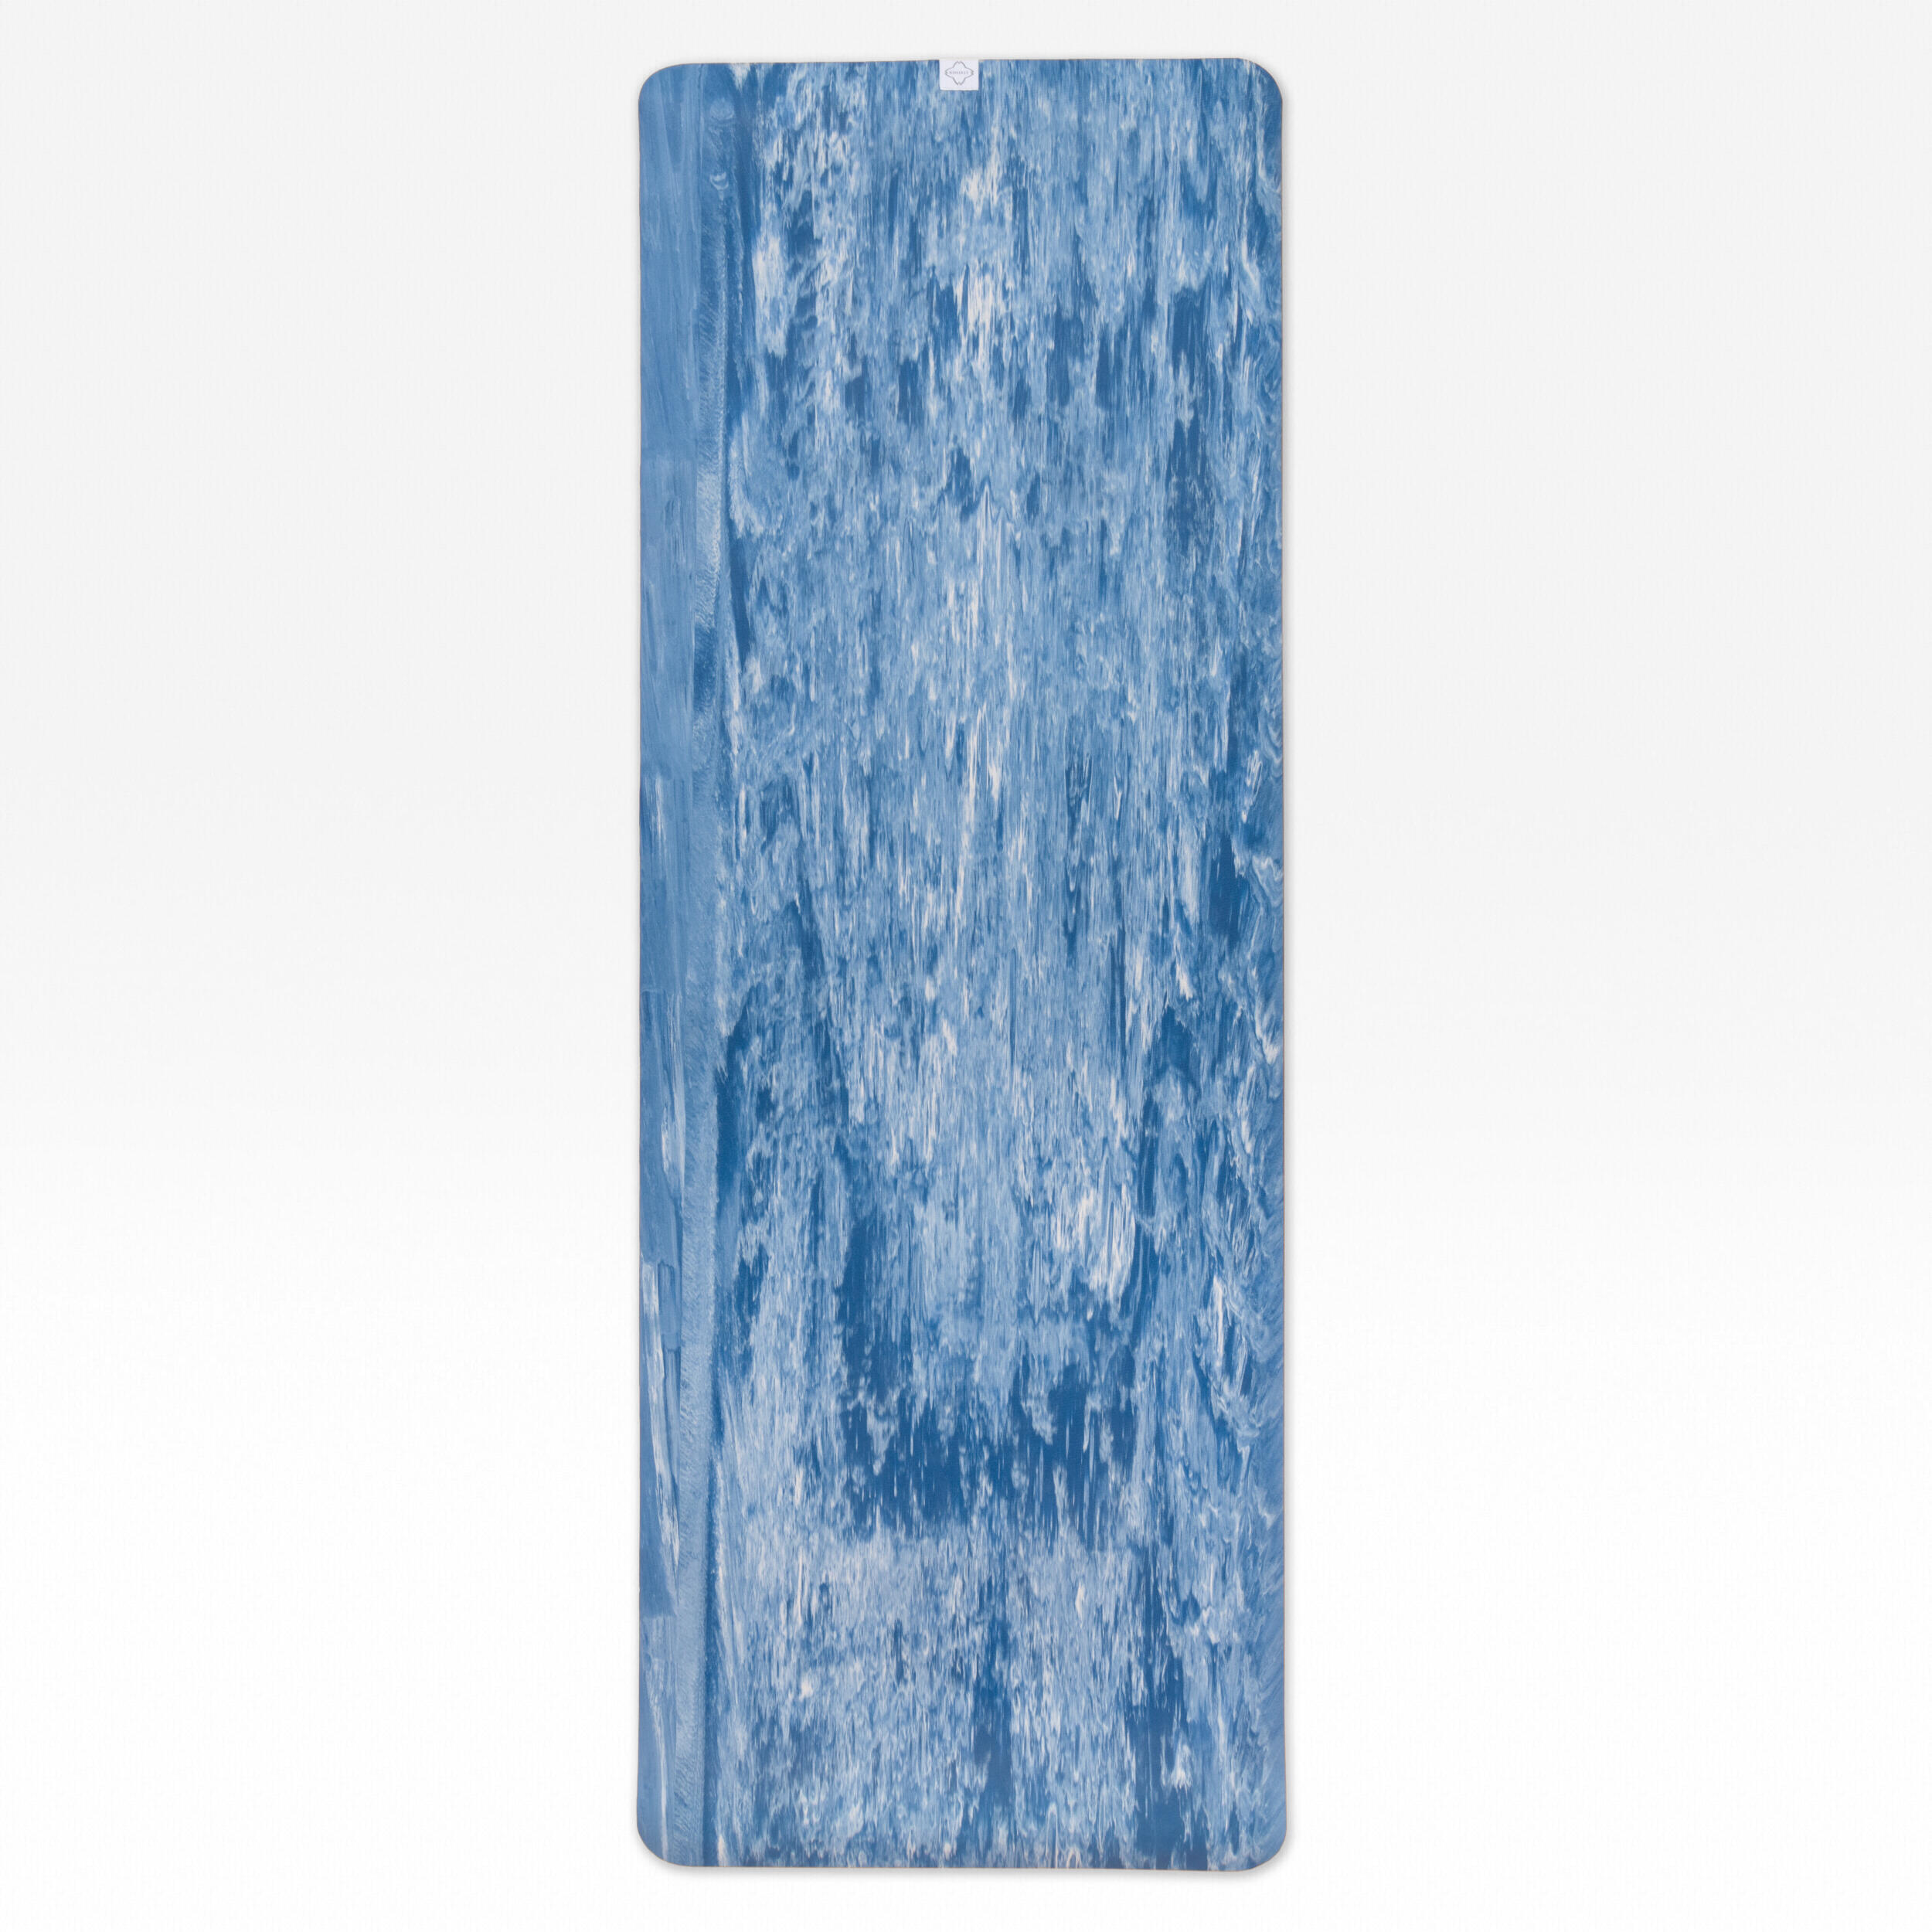 185 cm x 65 cm x 5 mm Yoga Mat Grip - Blue 1/6